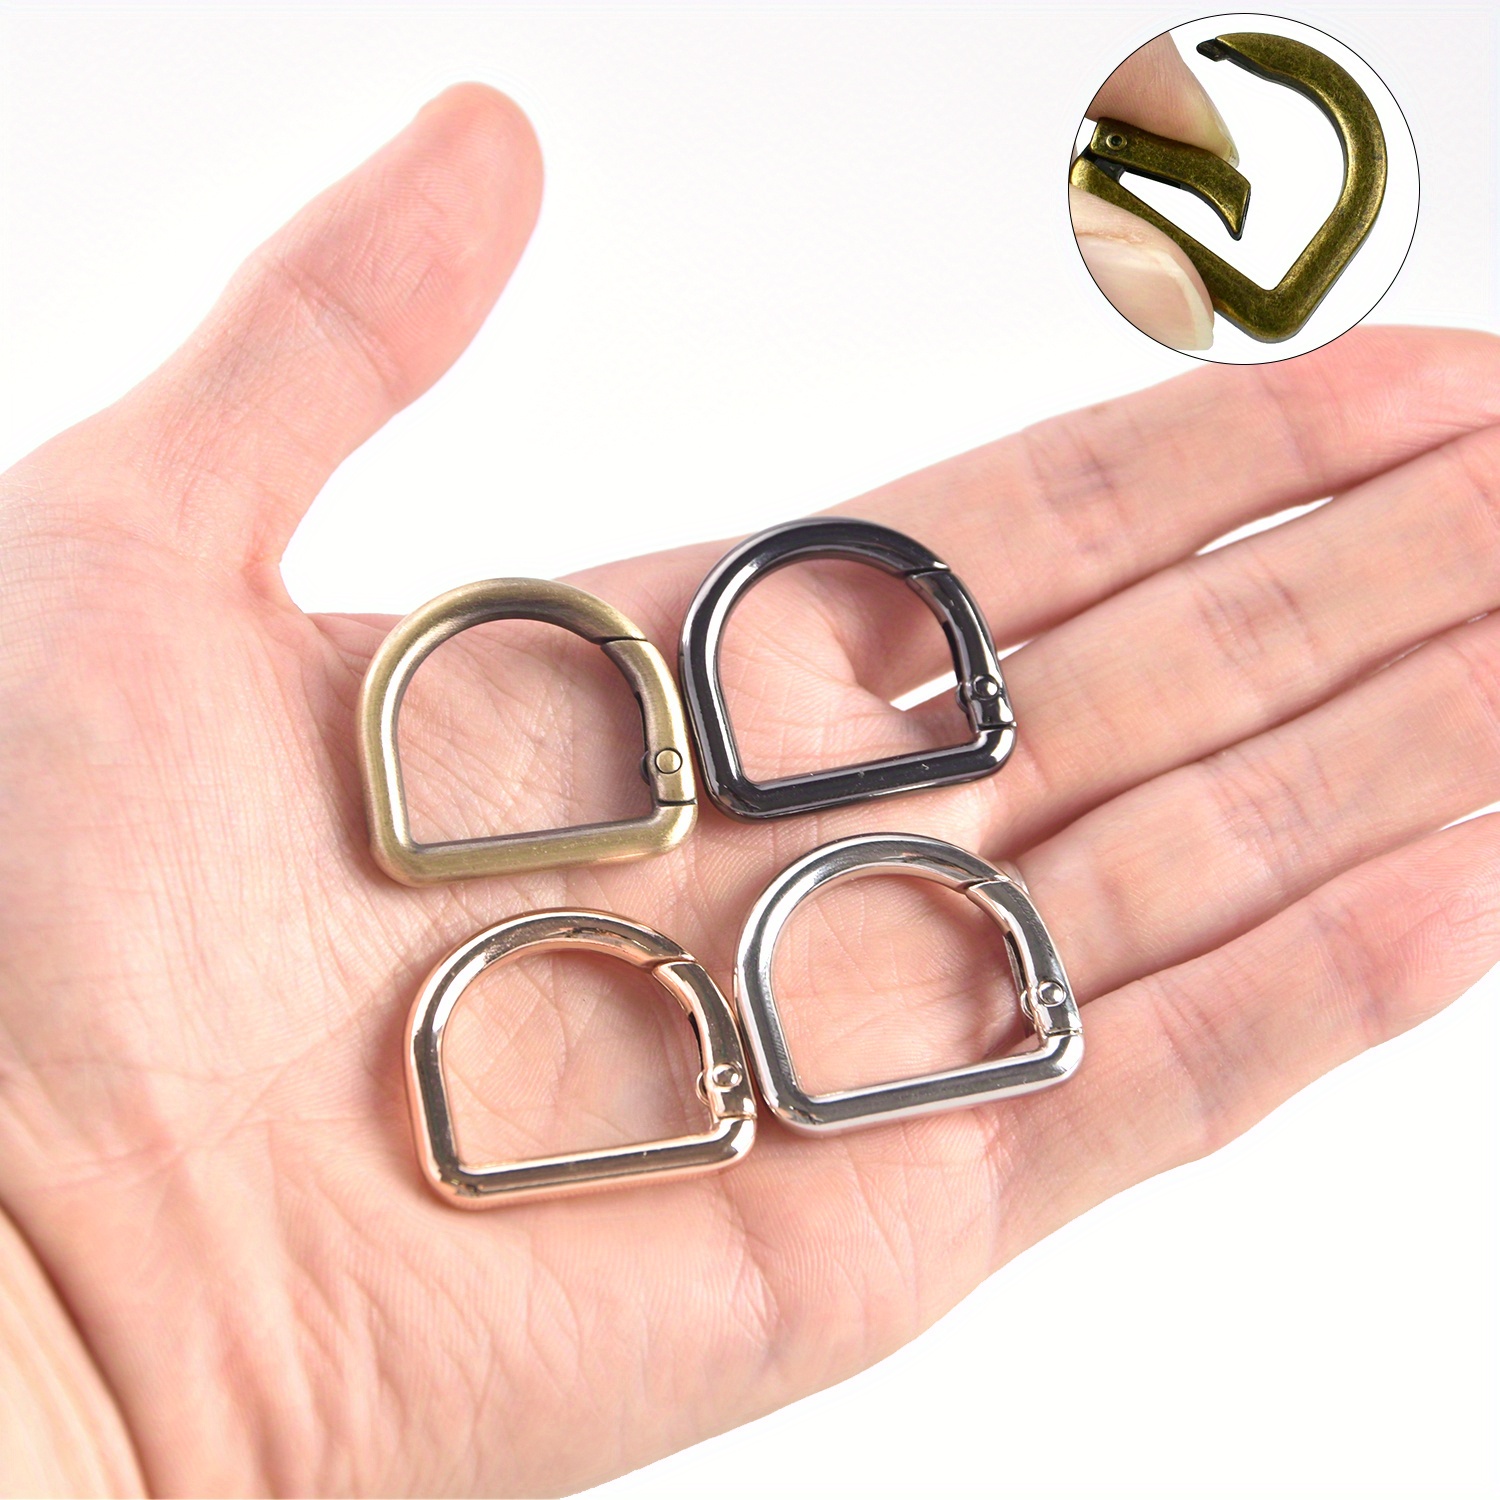 

5pcs Zinc Alloy D-ring Buckle Set For Purse Making - Adjustable Spring Hook Buckle For Diy Handbag Hardware Accessories